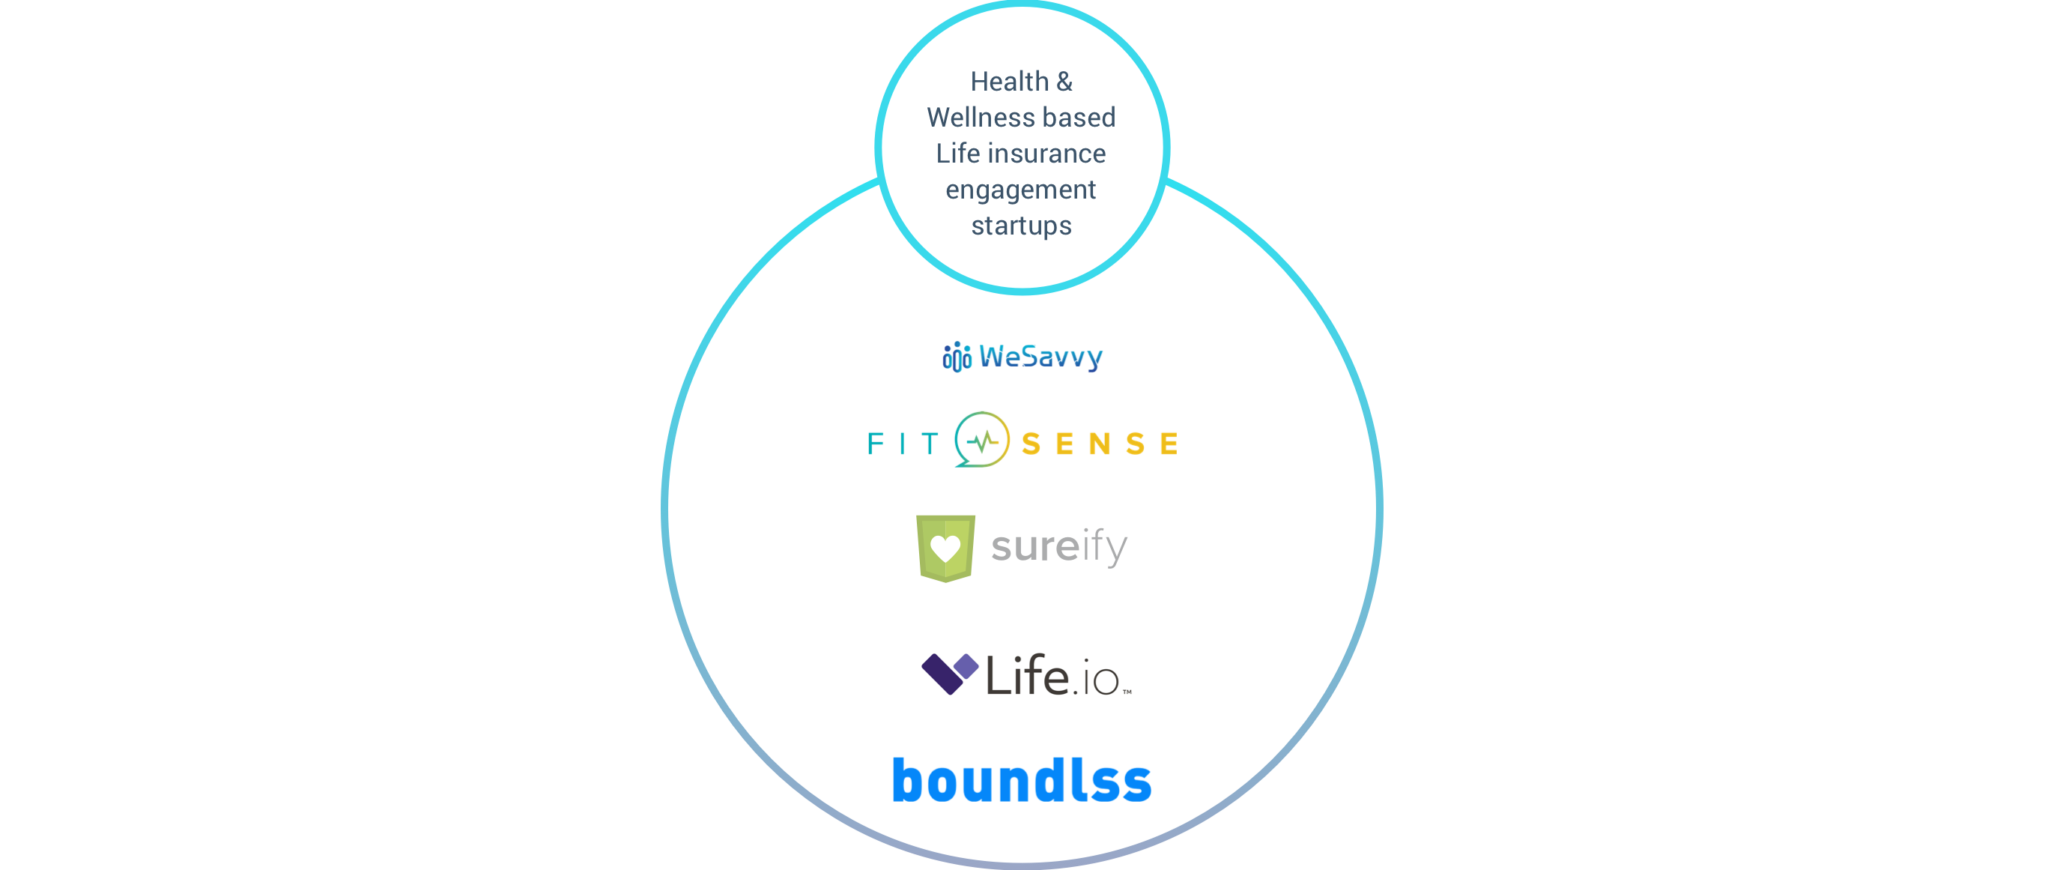 engagement focused life insurance startups